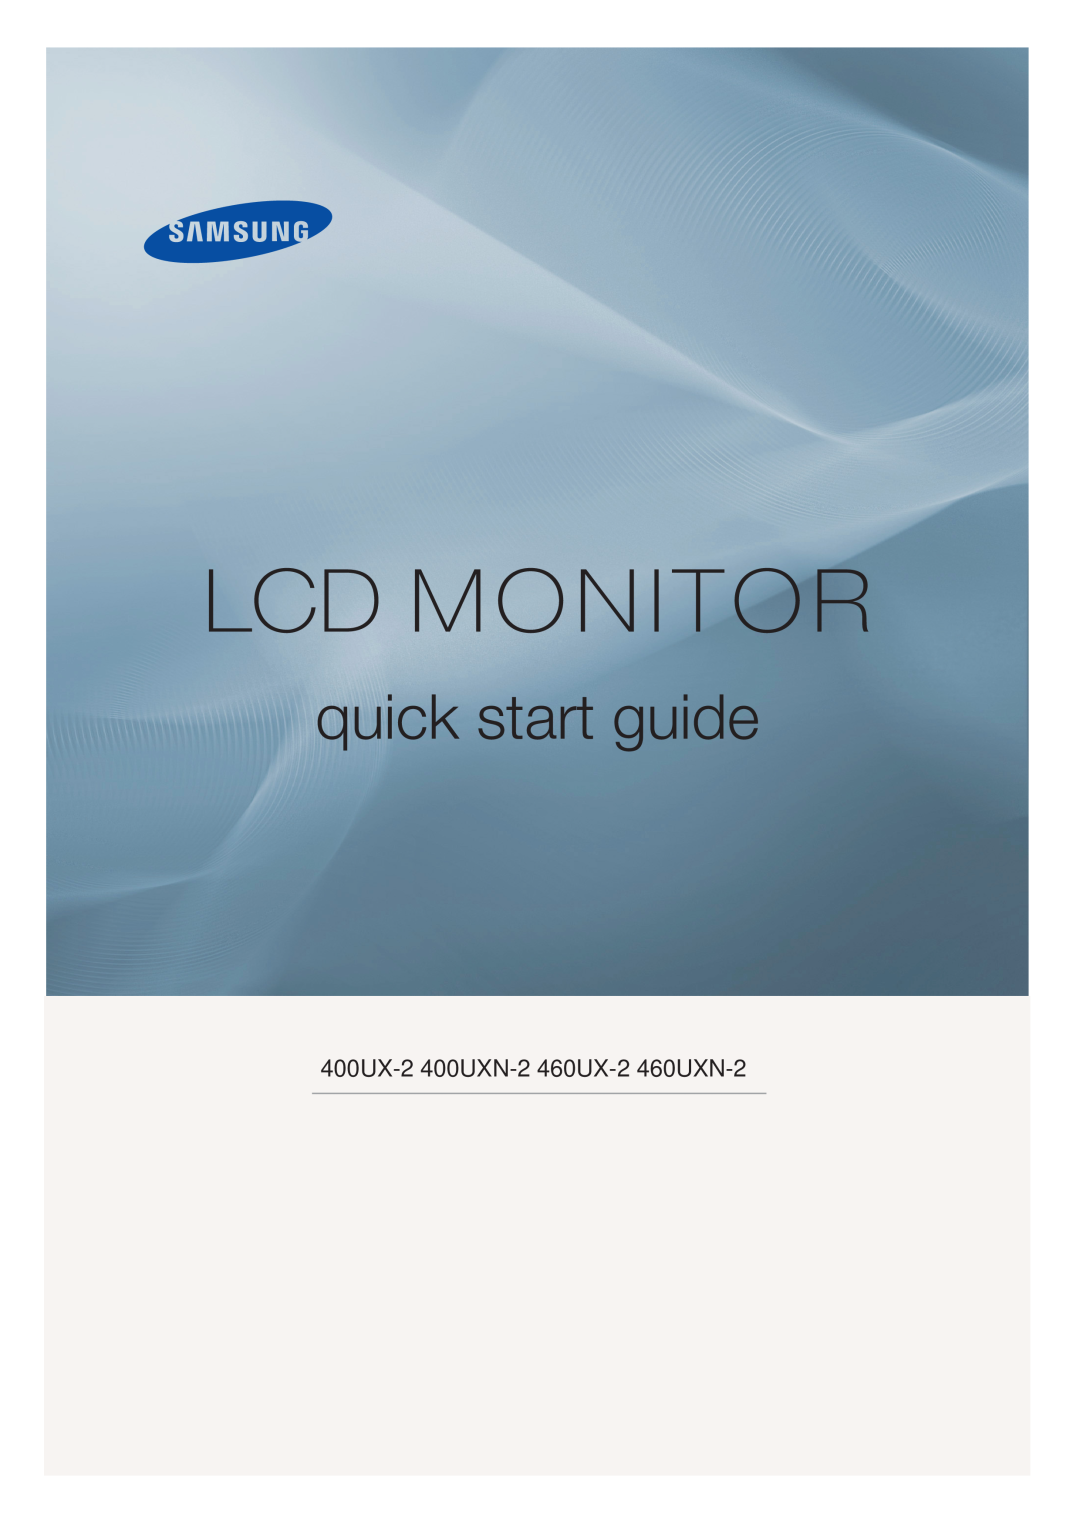 Samsung LH40MRTLBC/EN, LH46MRPLBF/EN manual Lcd Monitor, quick start guide, 400UX-2 400UXN-2 460UX-2 460UXN-2 